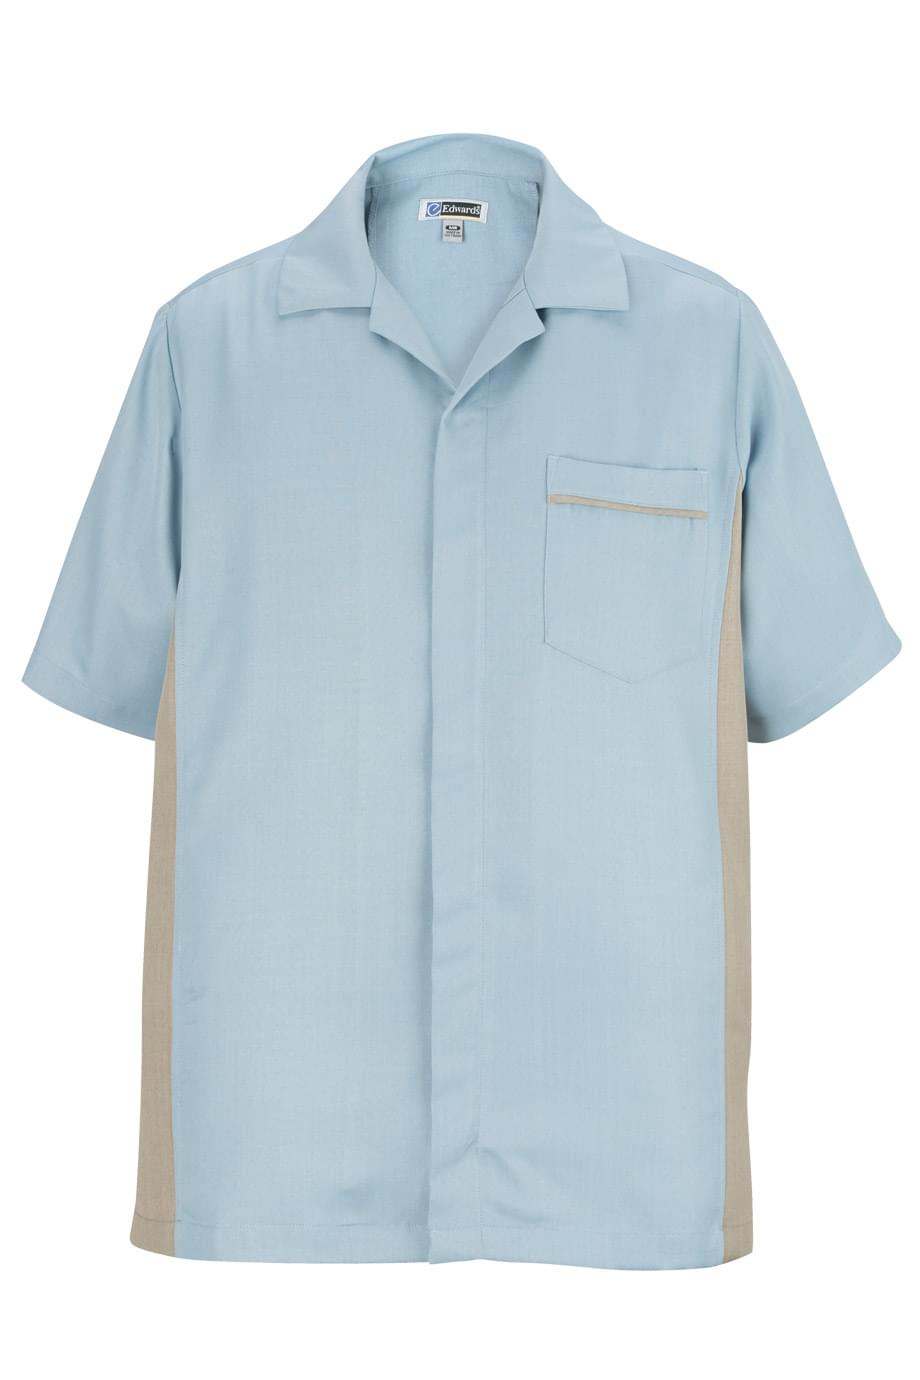 PREMIER SERVICE SHIRT | Edwards Garment